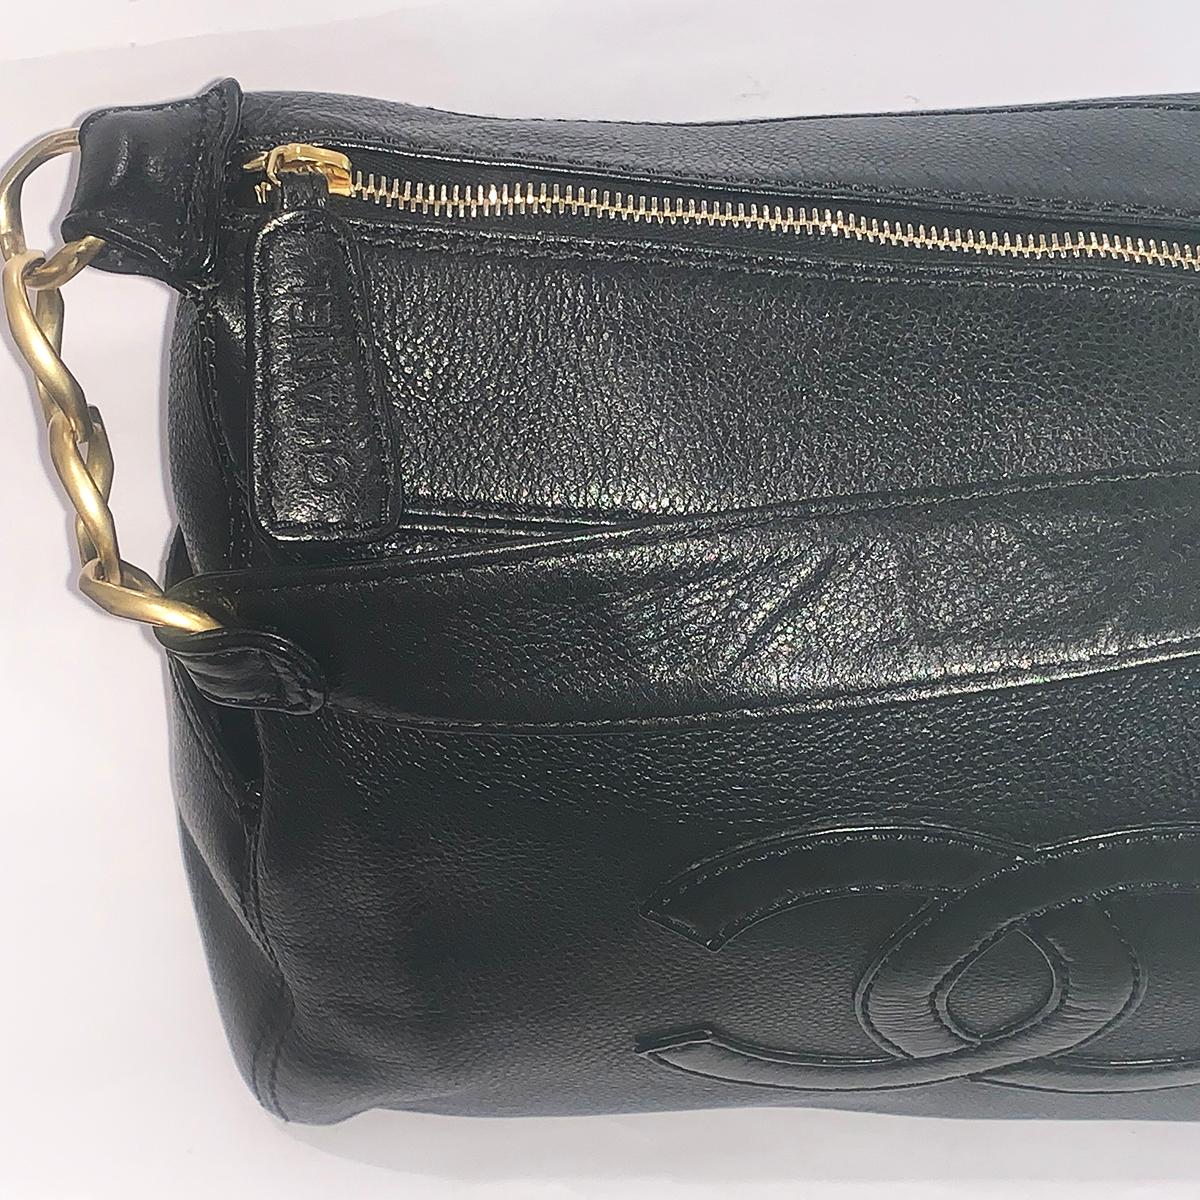 Authentic Black Large Chanel Caviar leather handbag bag For Sale 2